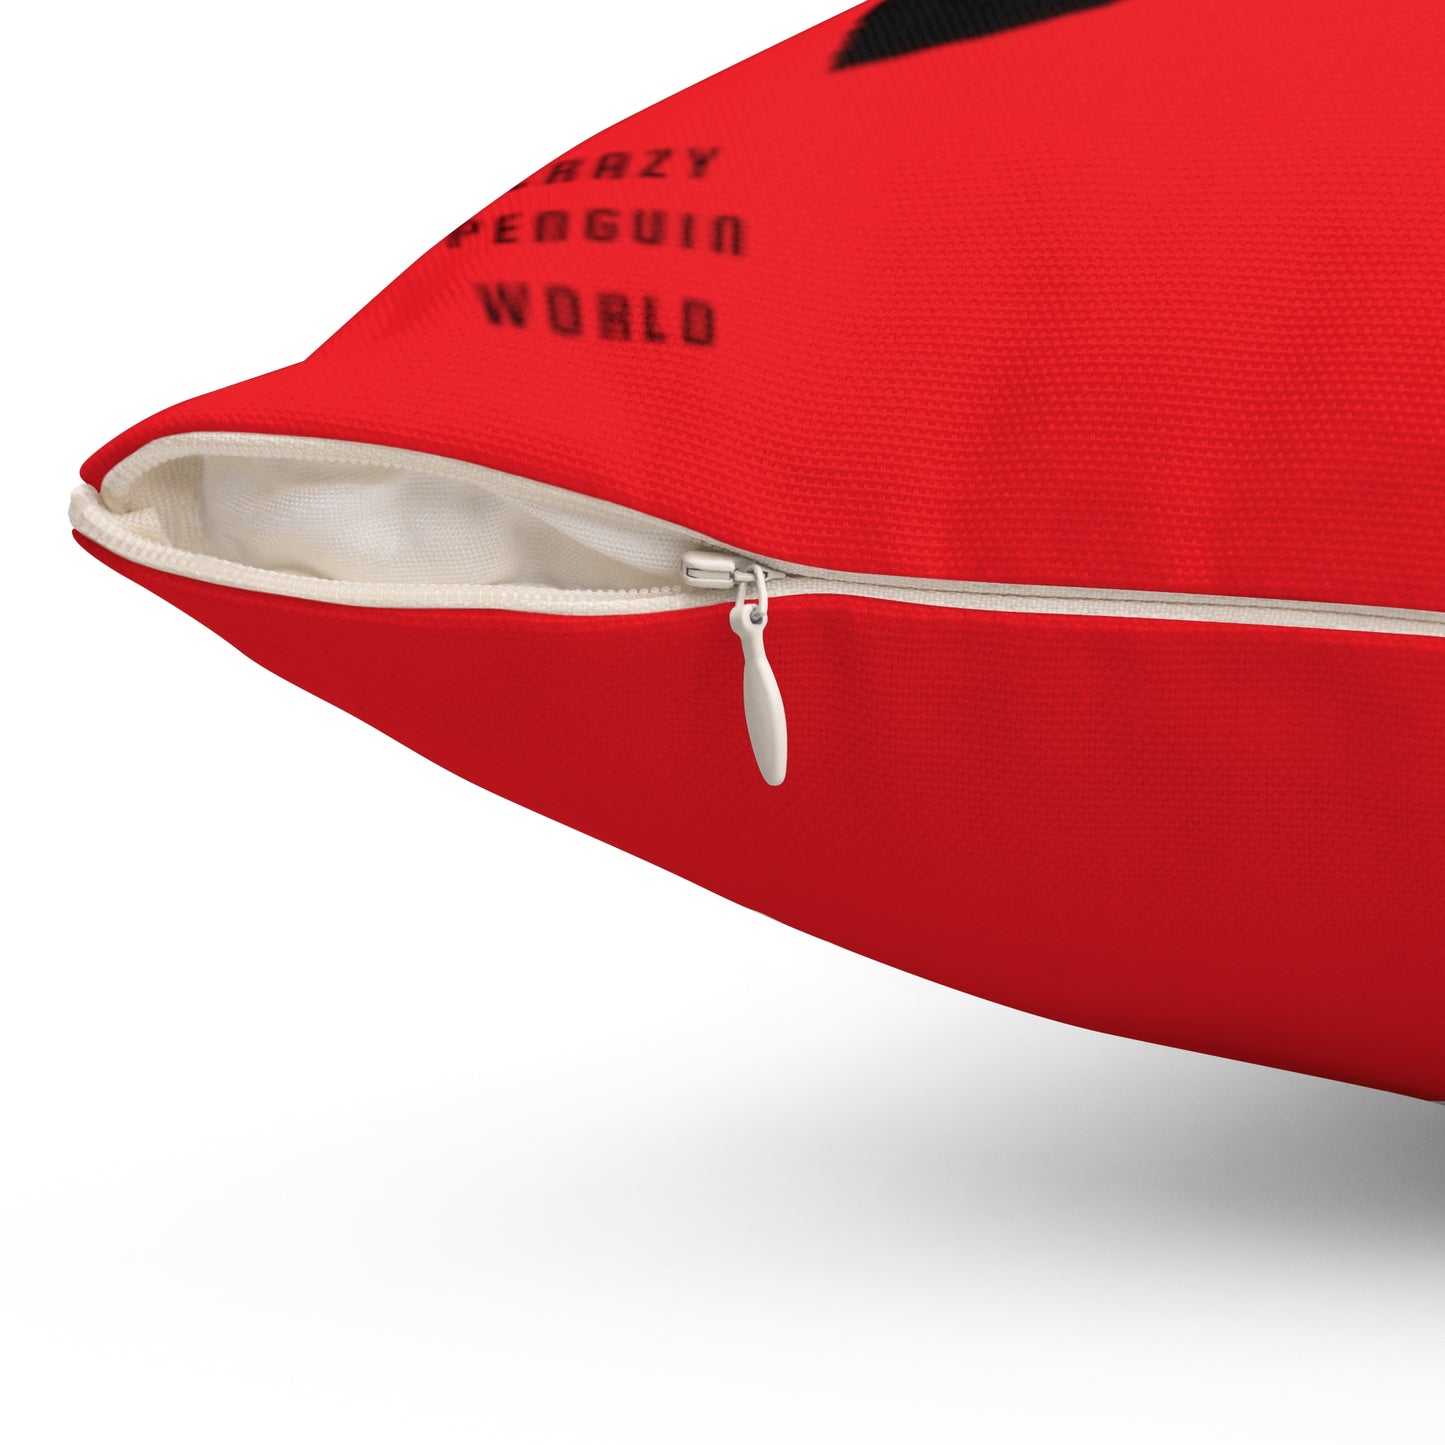 Spun Polyester Square Pillow: Crazy Penguin World Logo Red